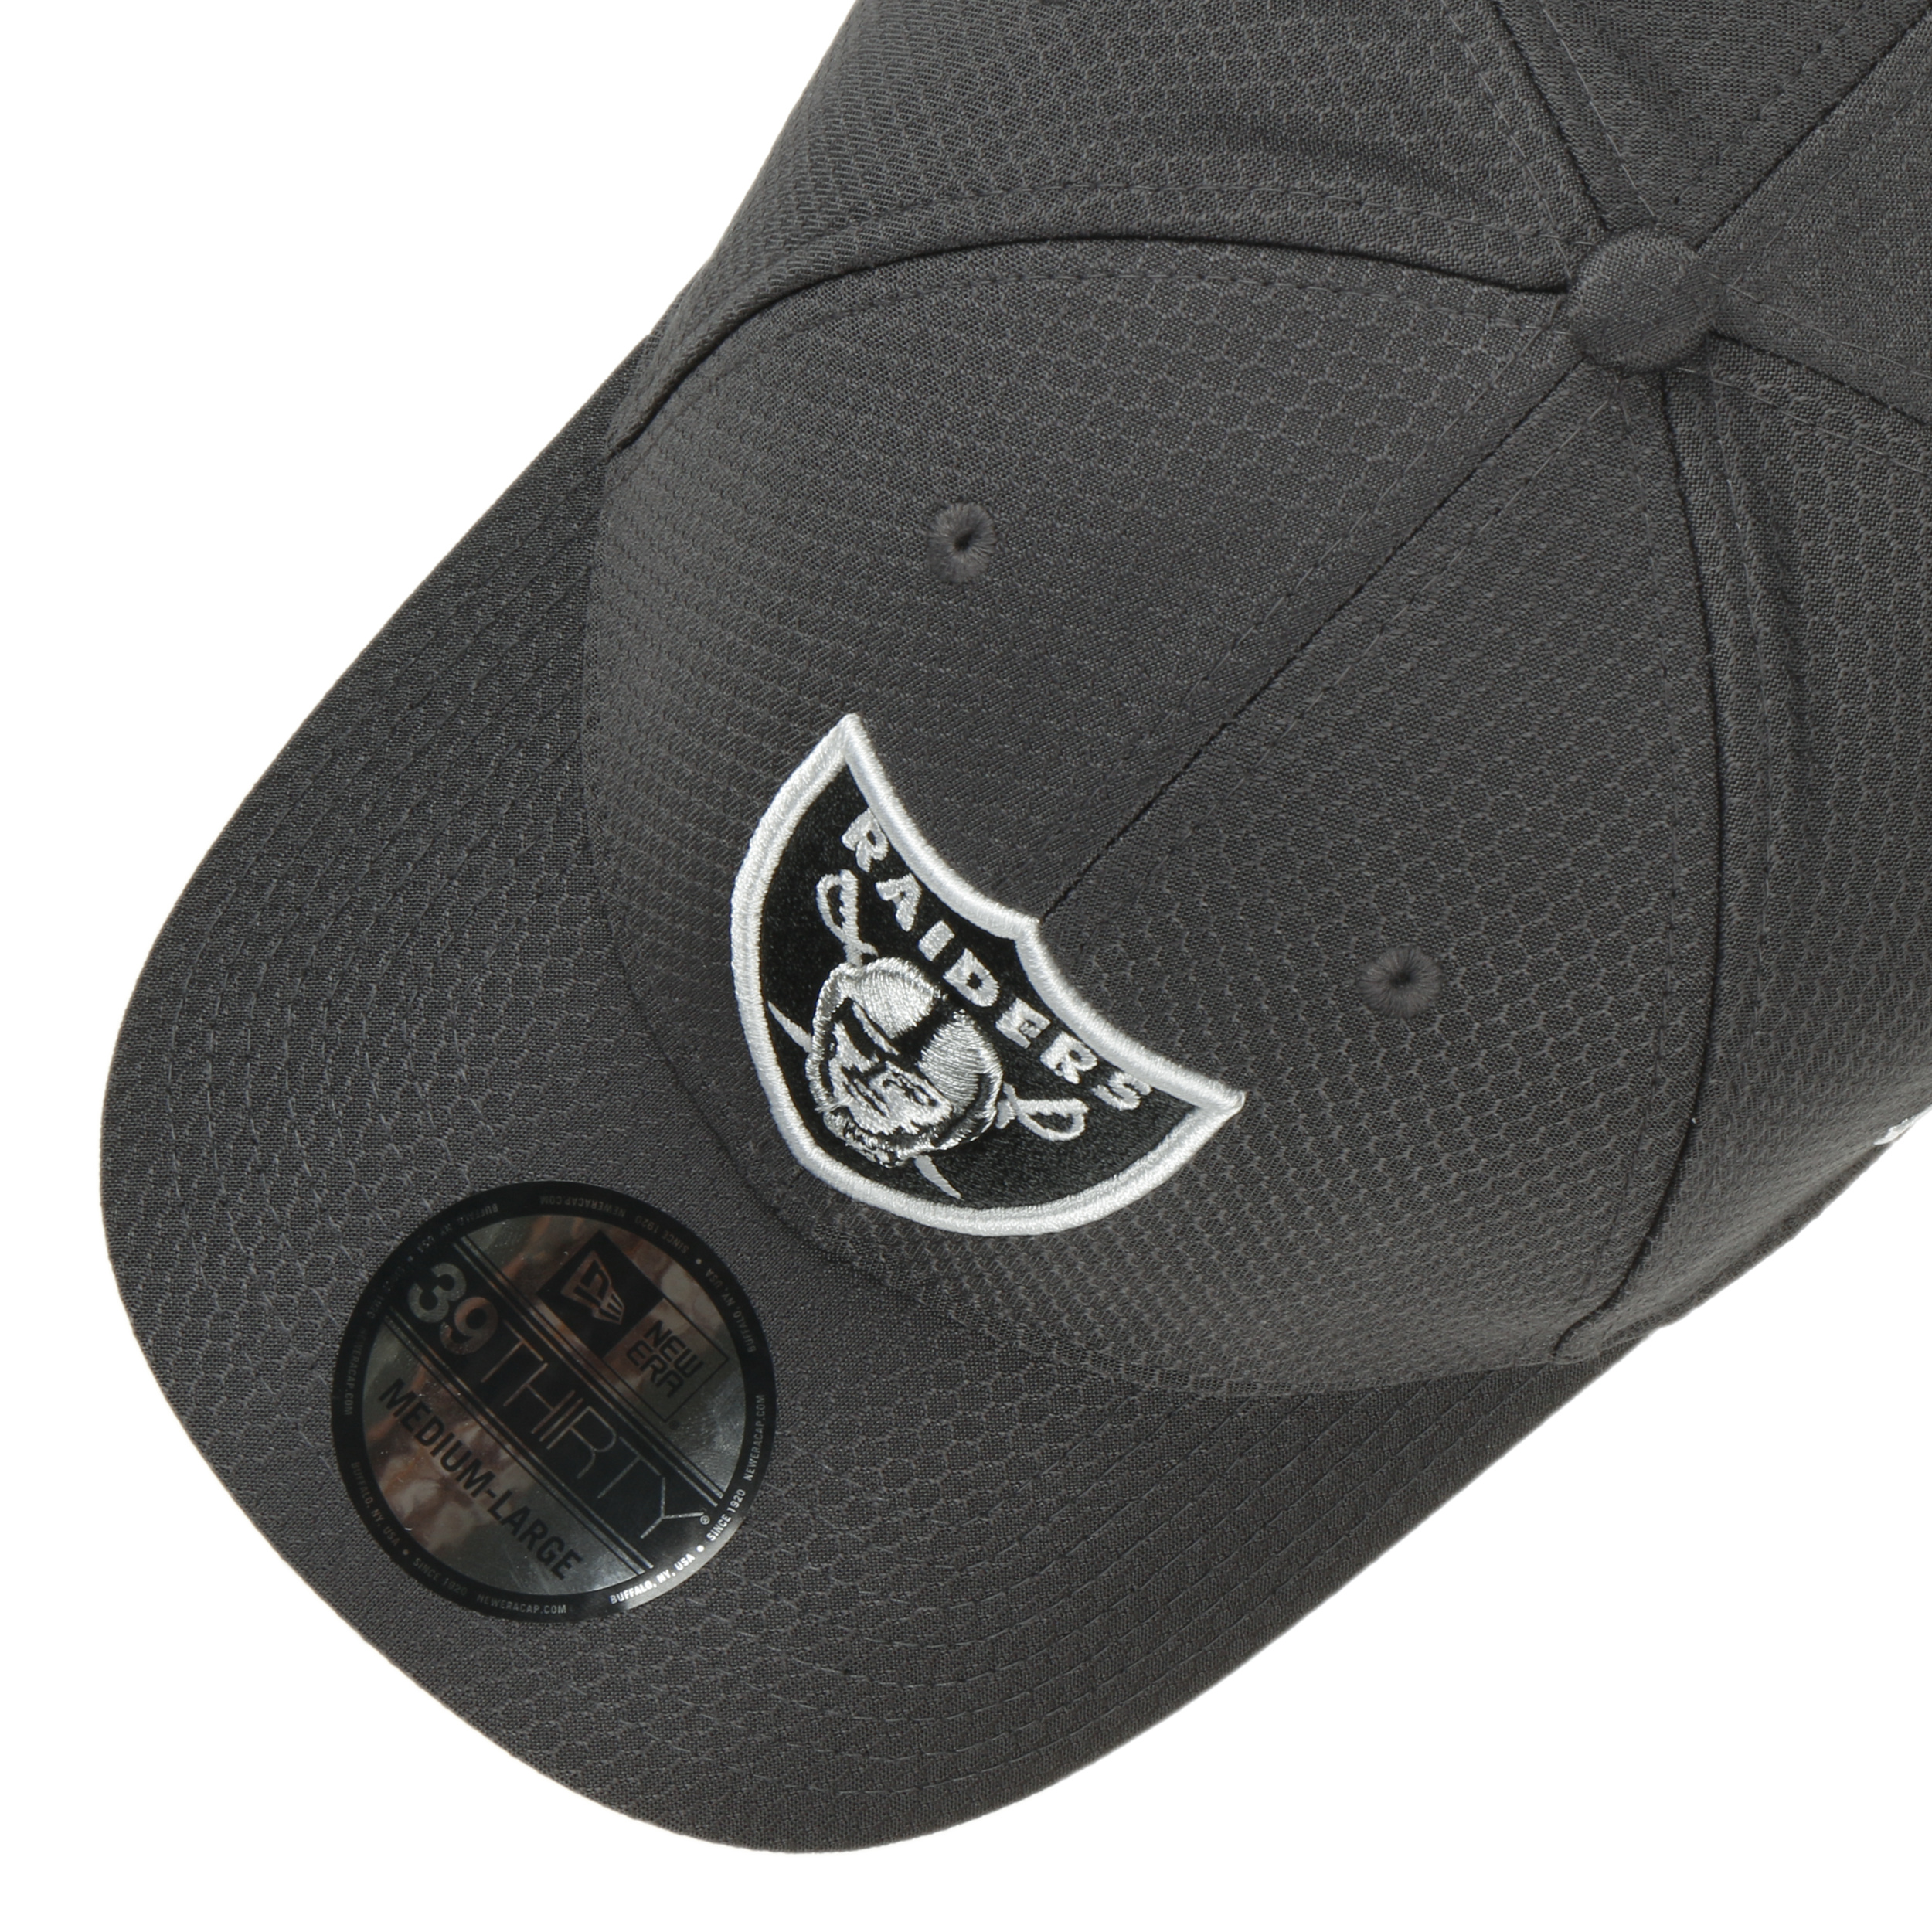 New Era Las Vegas Raiders bobble beanie hat in grey